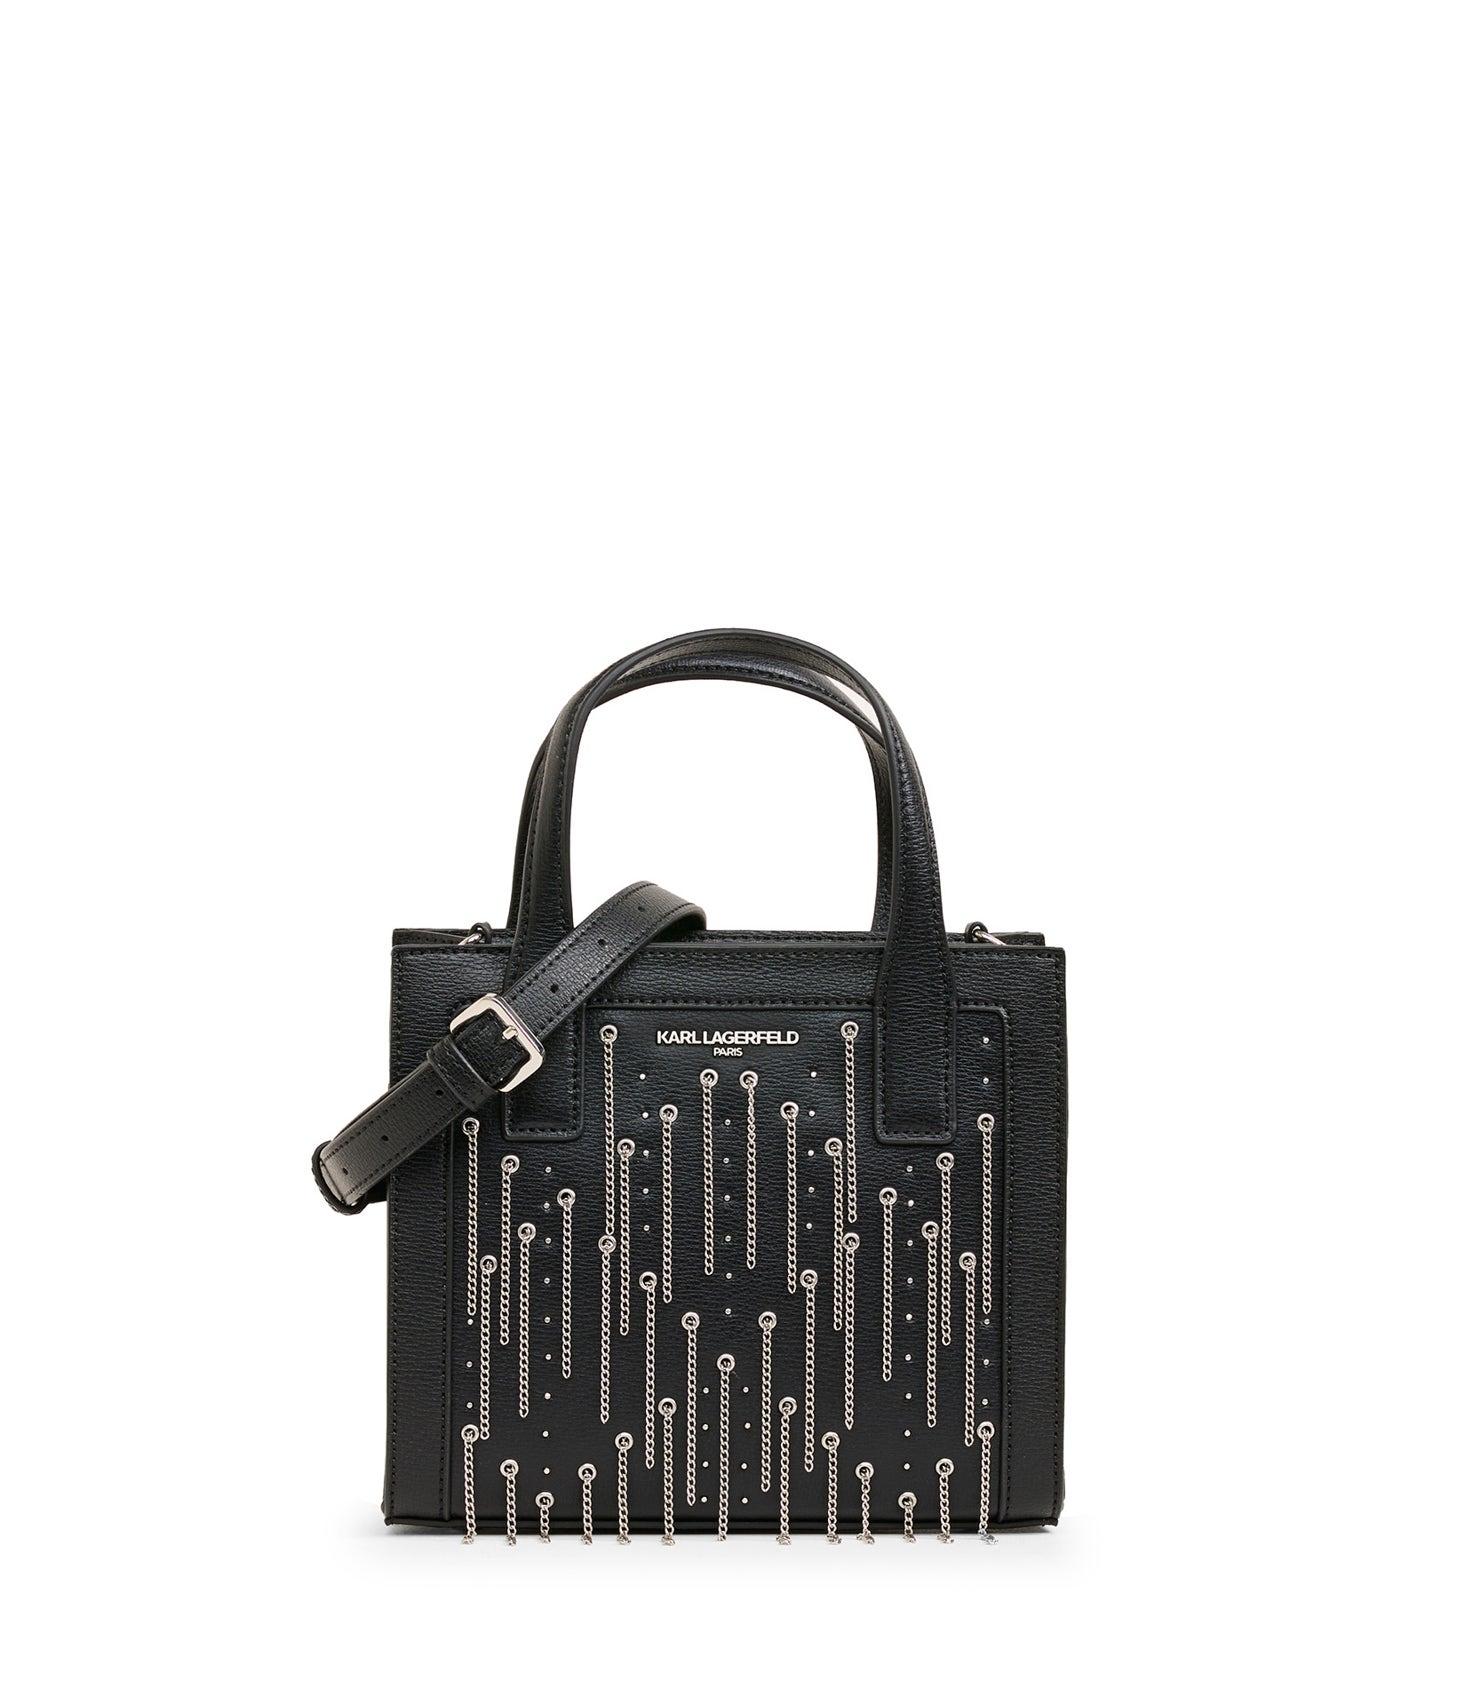 Karl Lagerfeld | Women's Nouveau Grommet Chain Small Tote Bag |  Black/silver | Lyst